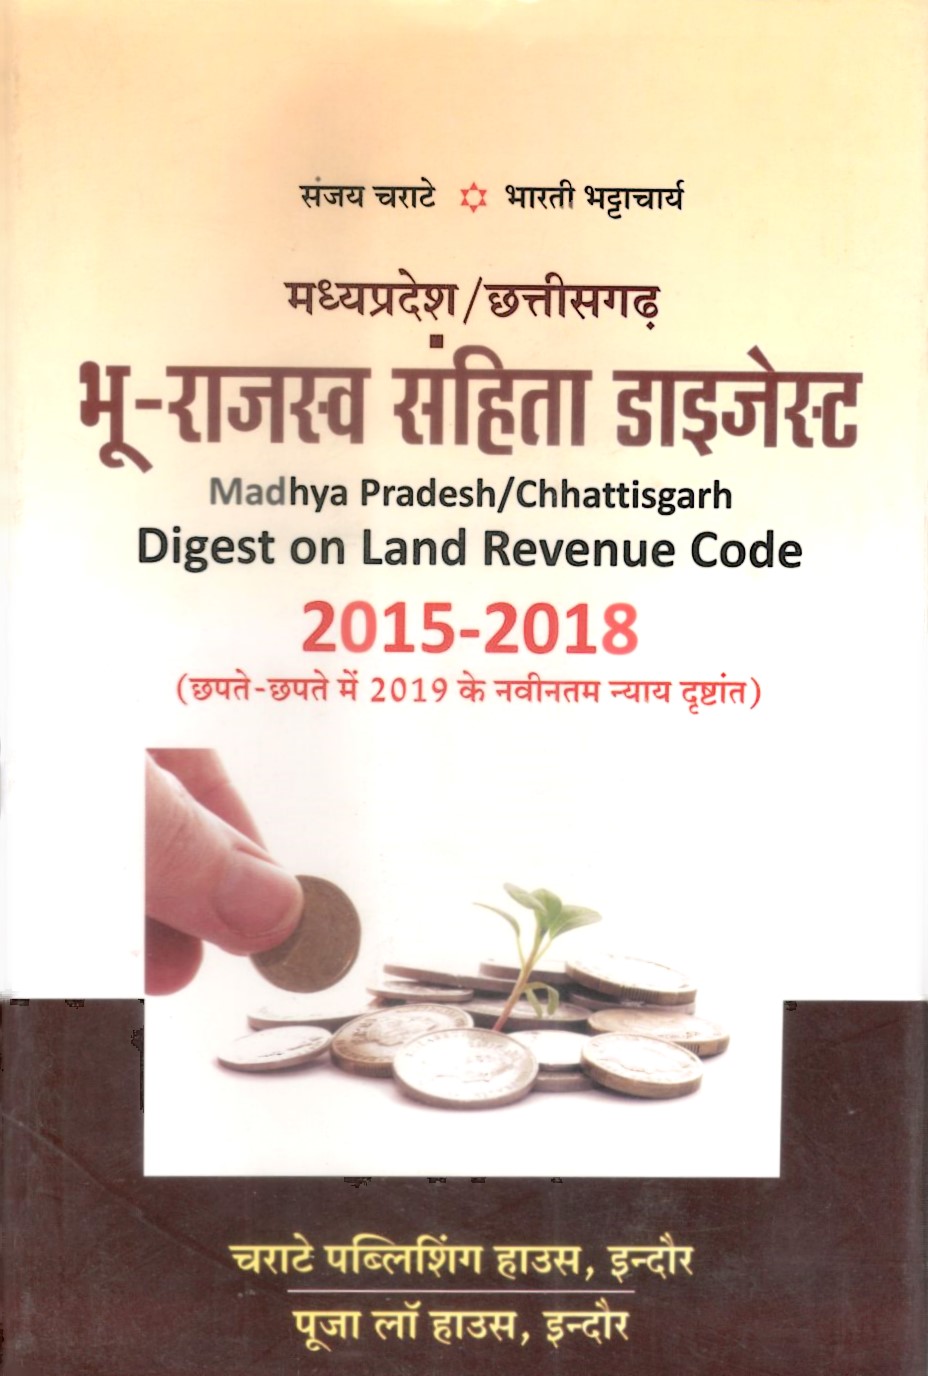 मध्य प्रदेश/छत्तीसगढ़ भू - राजस्व संहिता डाइजेस्ट - Madhya Pradesh/Chhattisgarh Digest on Land Revenue Code 2015 - 2018